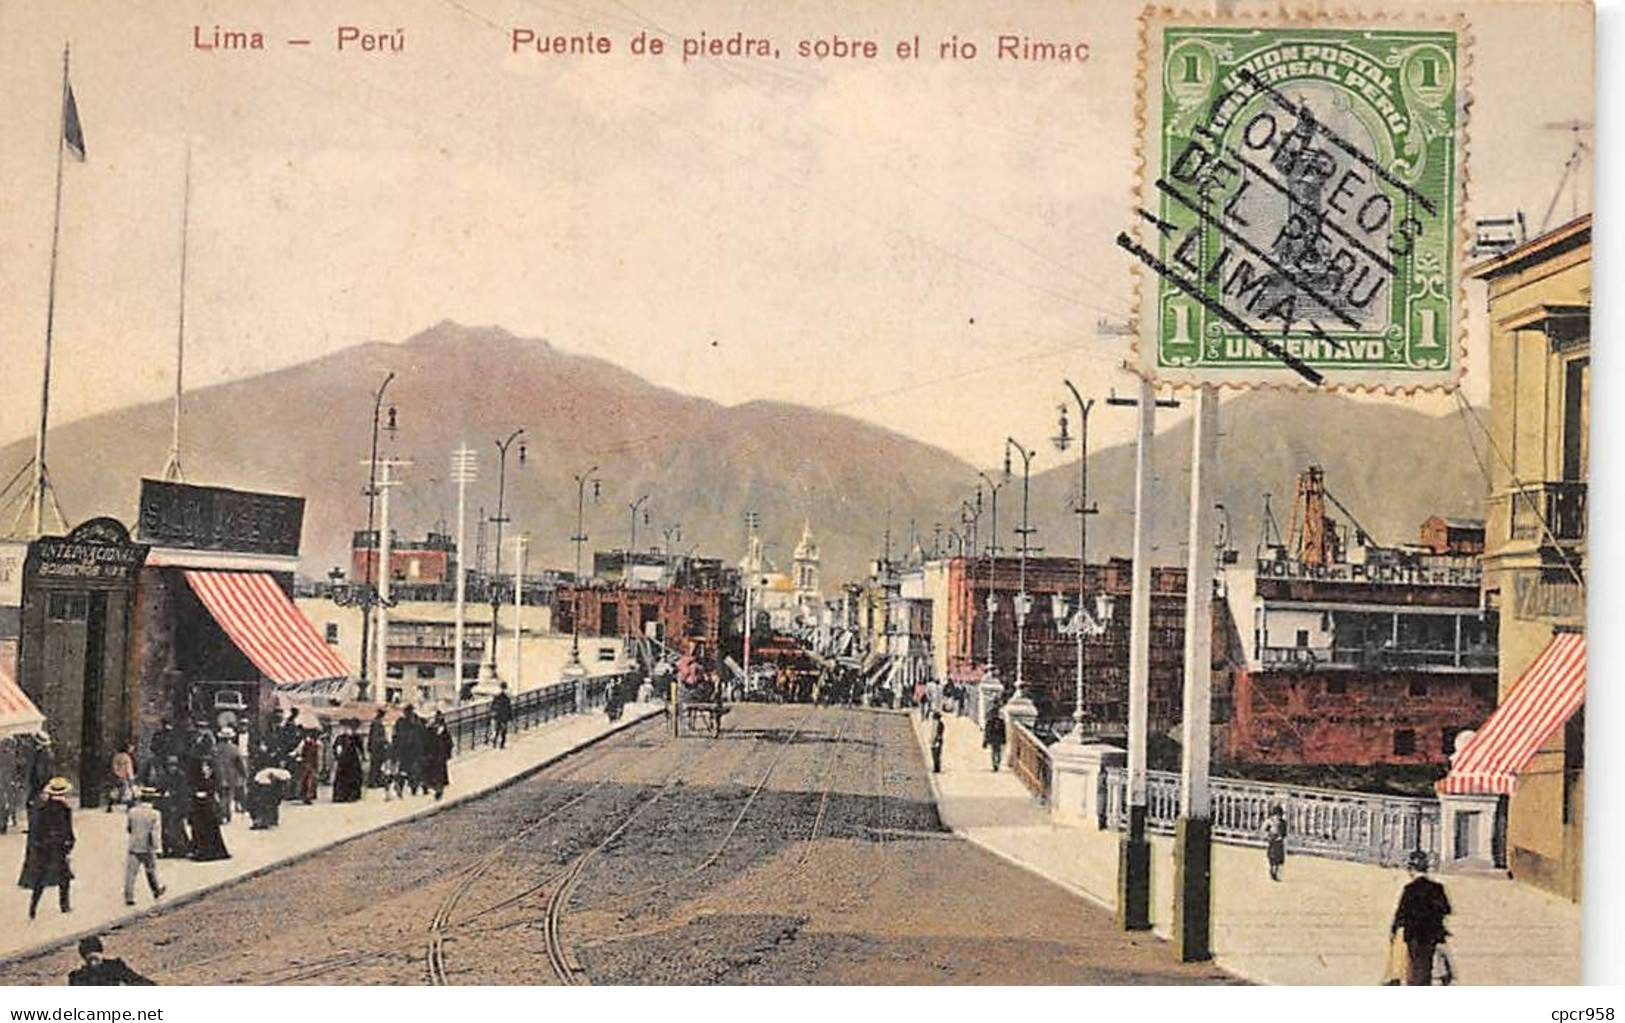 Pérou - N°79025 - LIMA - Puente De Piedra, Sobre El Rio Rimac - AFFRANCHISSEMENT DE COMPLAISANCE - Perú